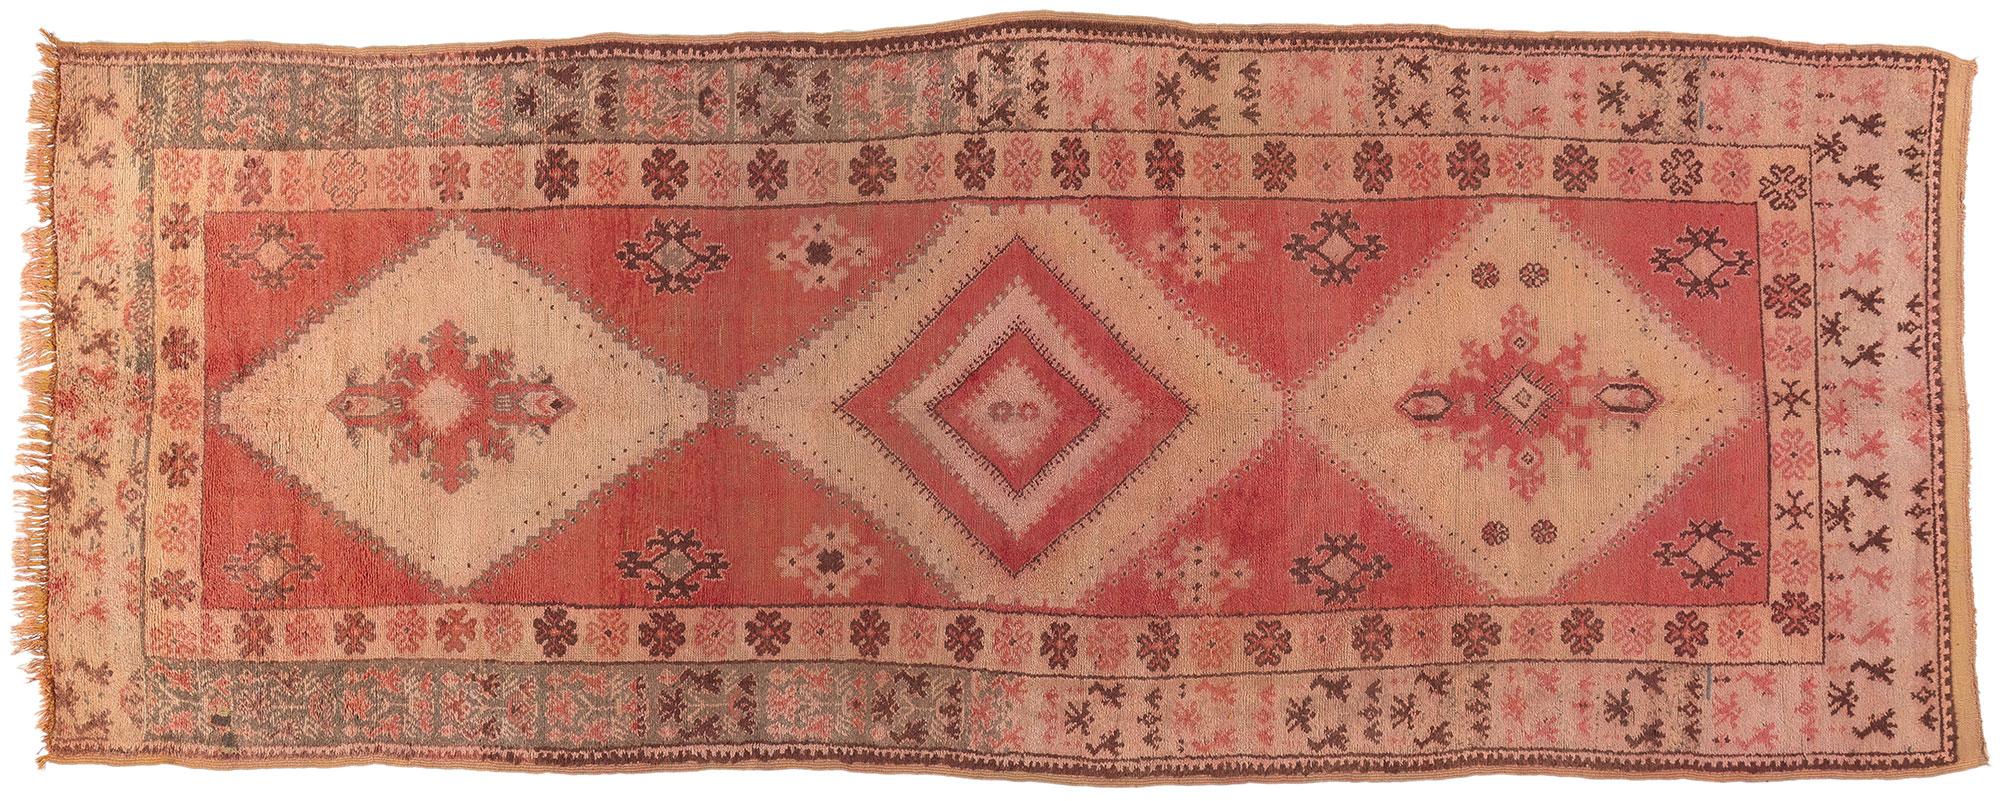 Vintage Talsint Moroccan Rug, Boho Jungalow Meets Nomadic Charm For Sale 3